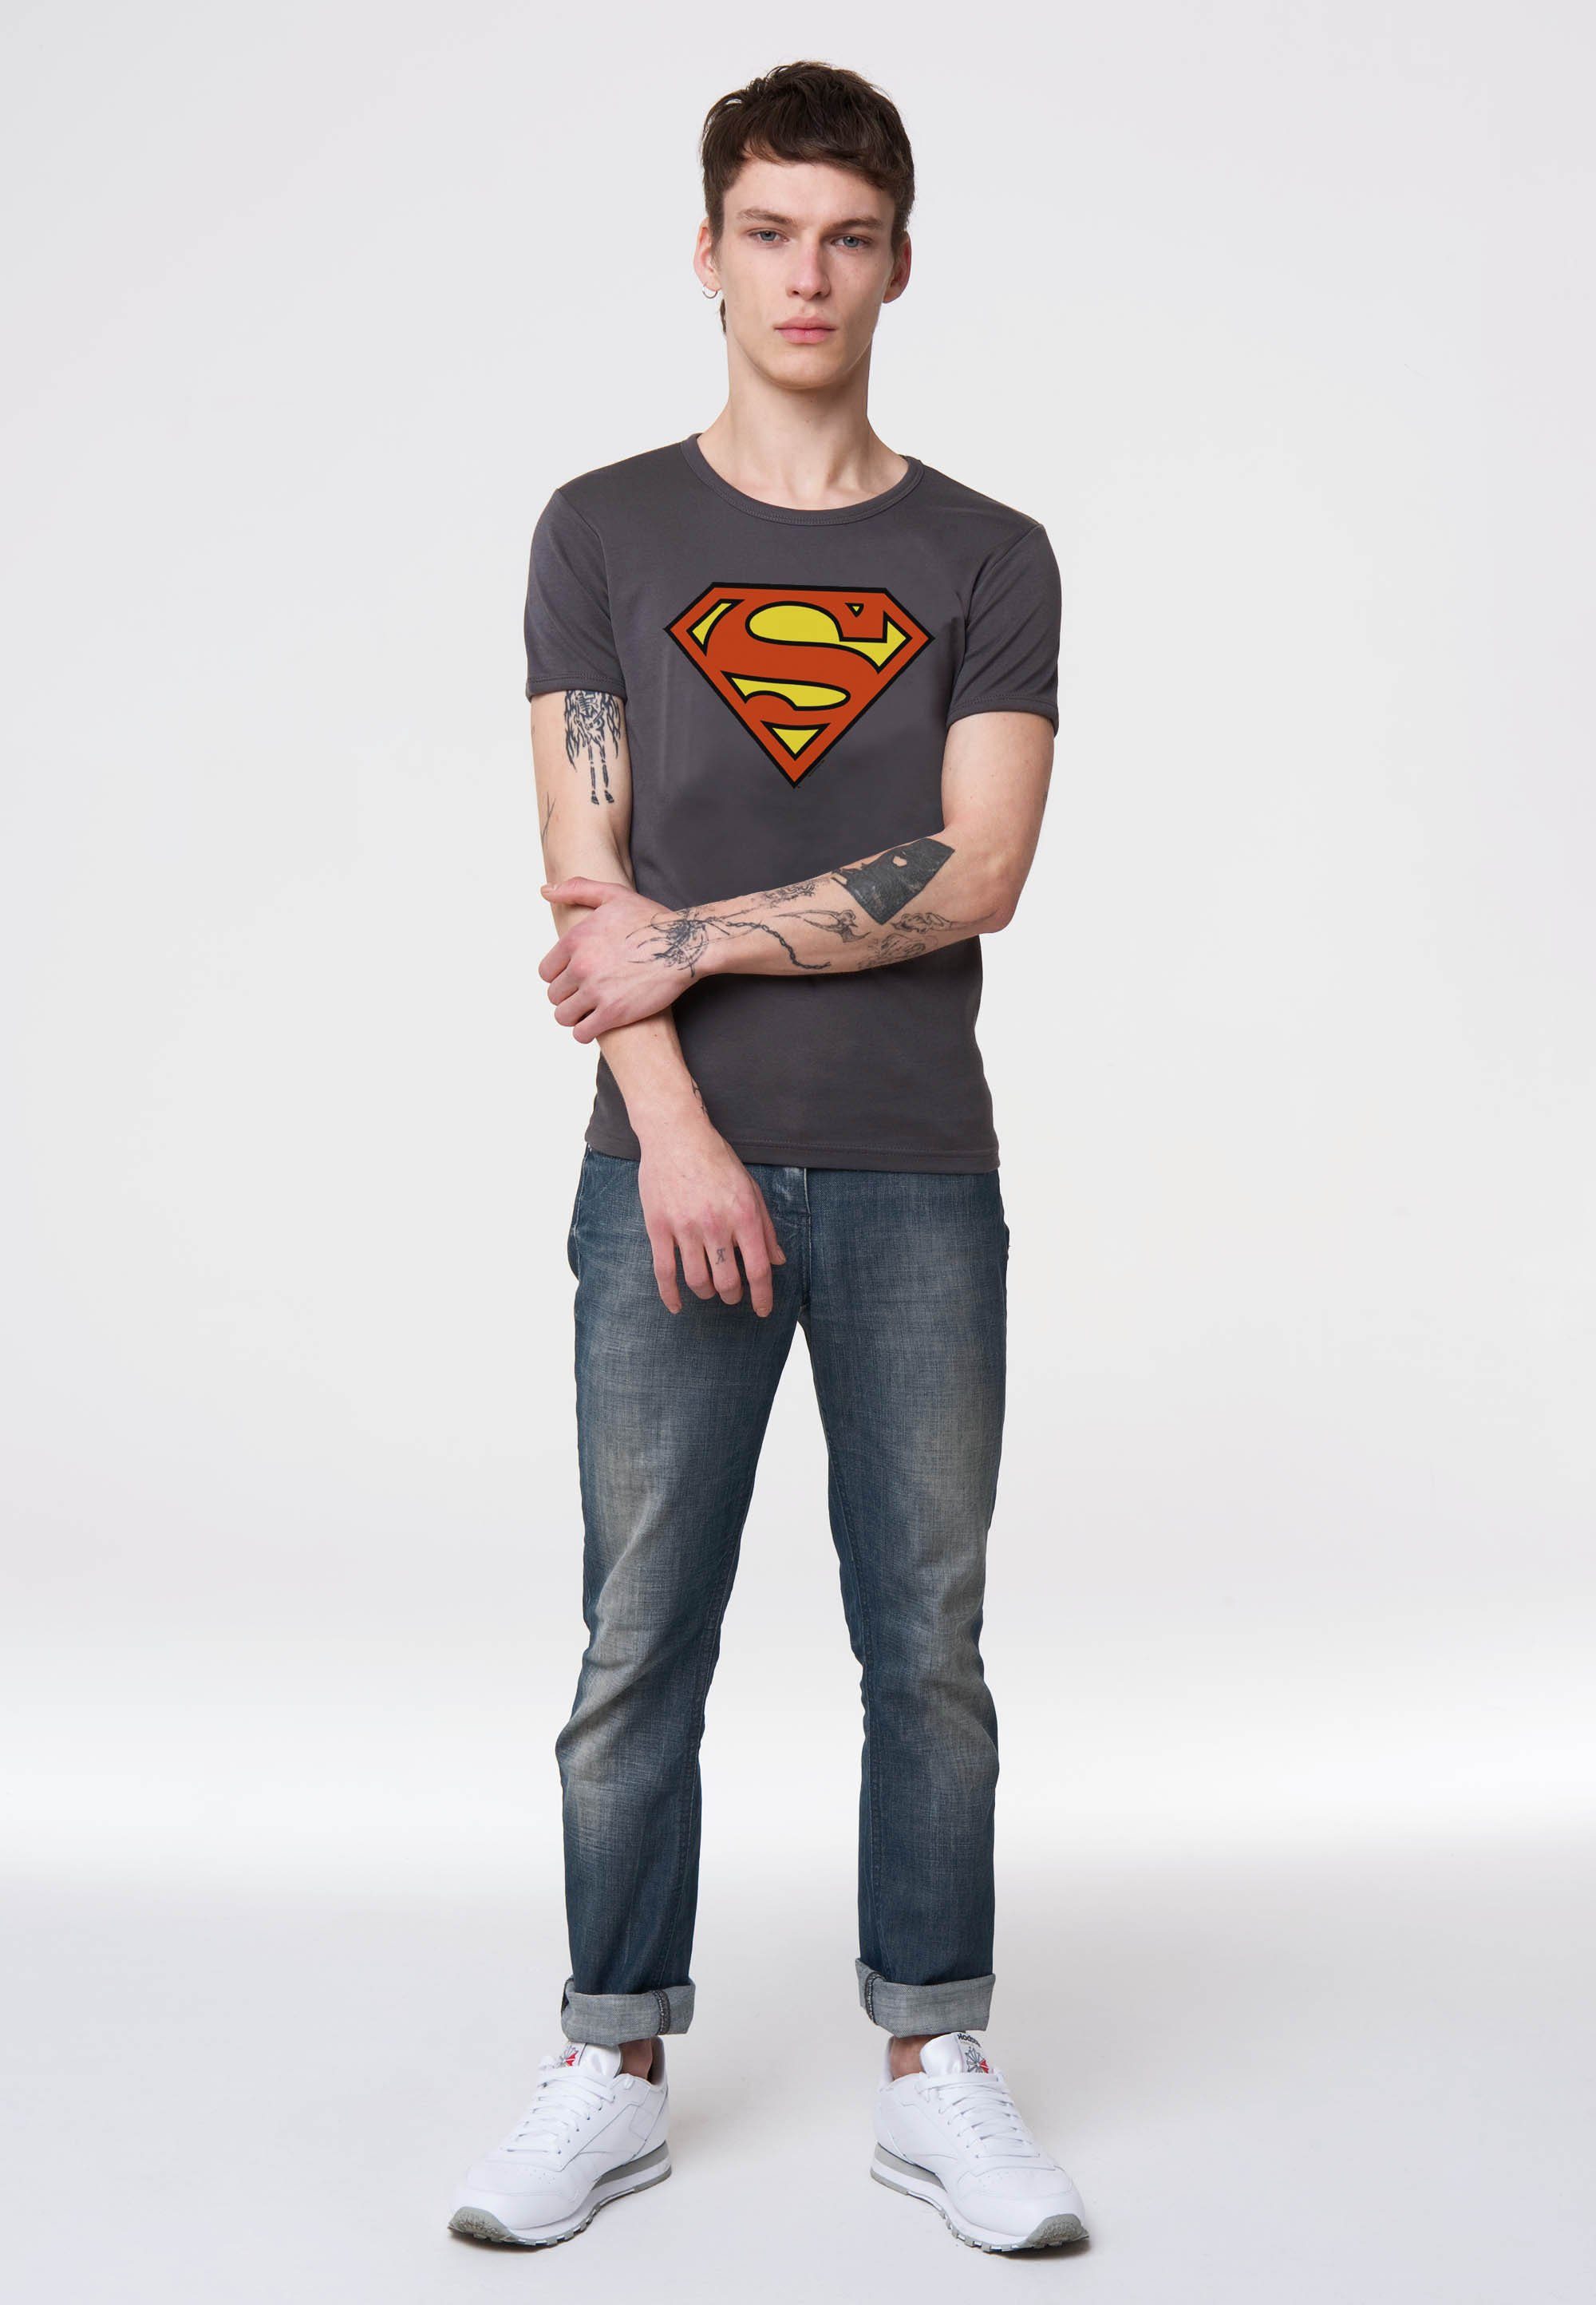 LOGOSHIRT T-Shirt Superman Logo trendigem grau mit Superhelden-Print